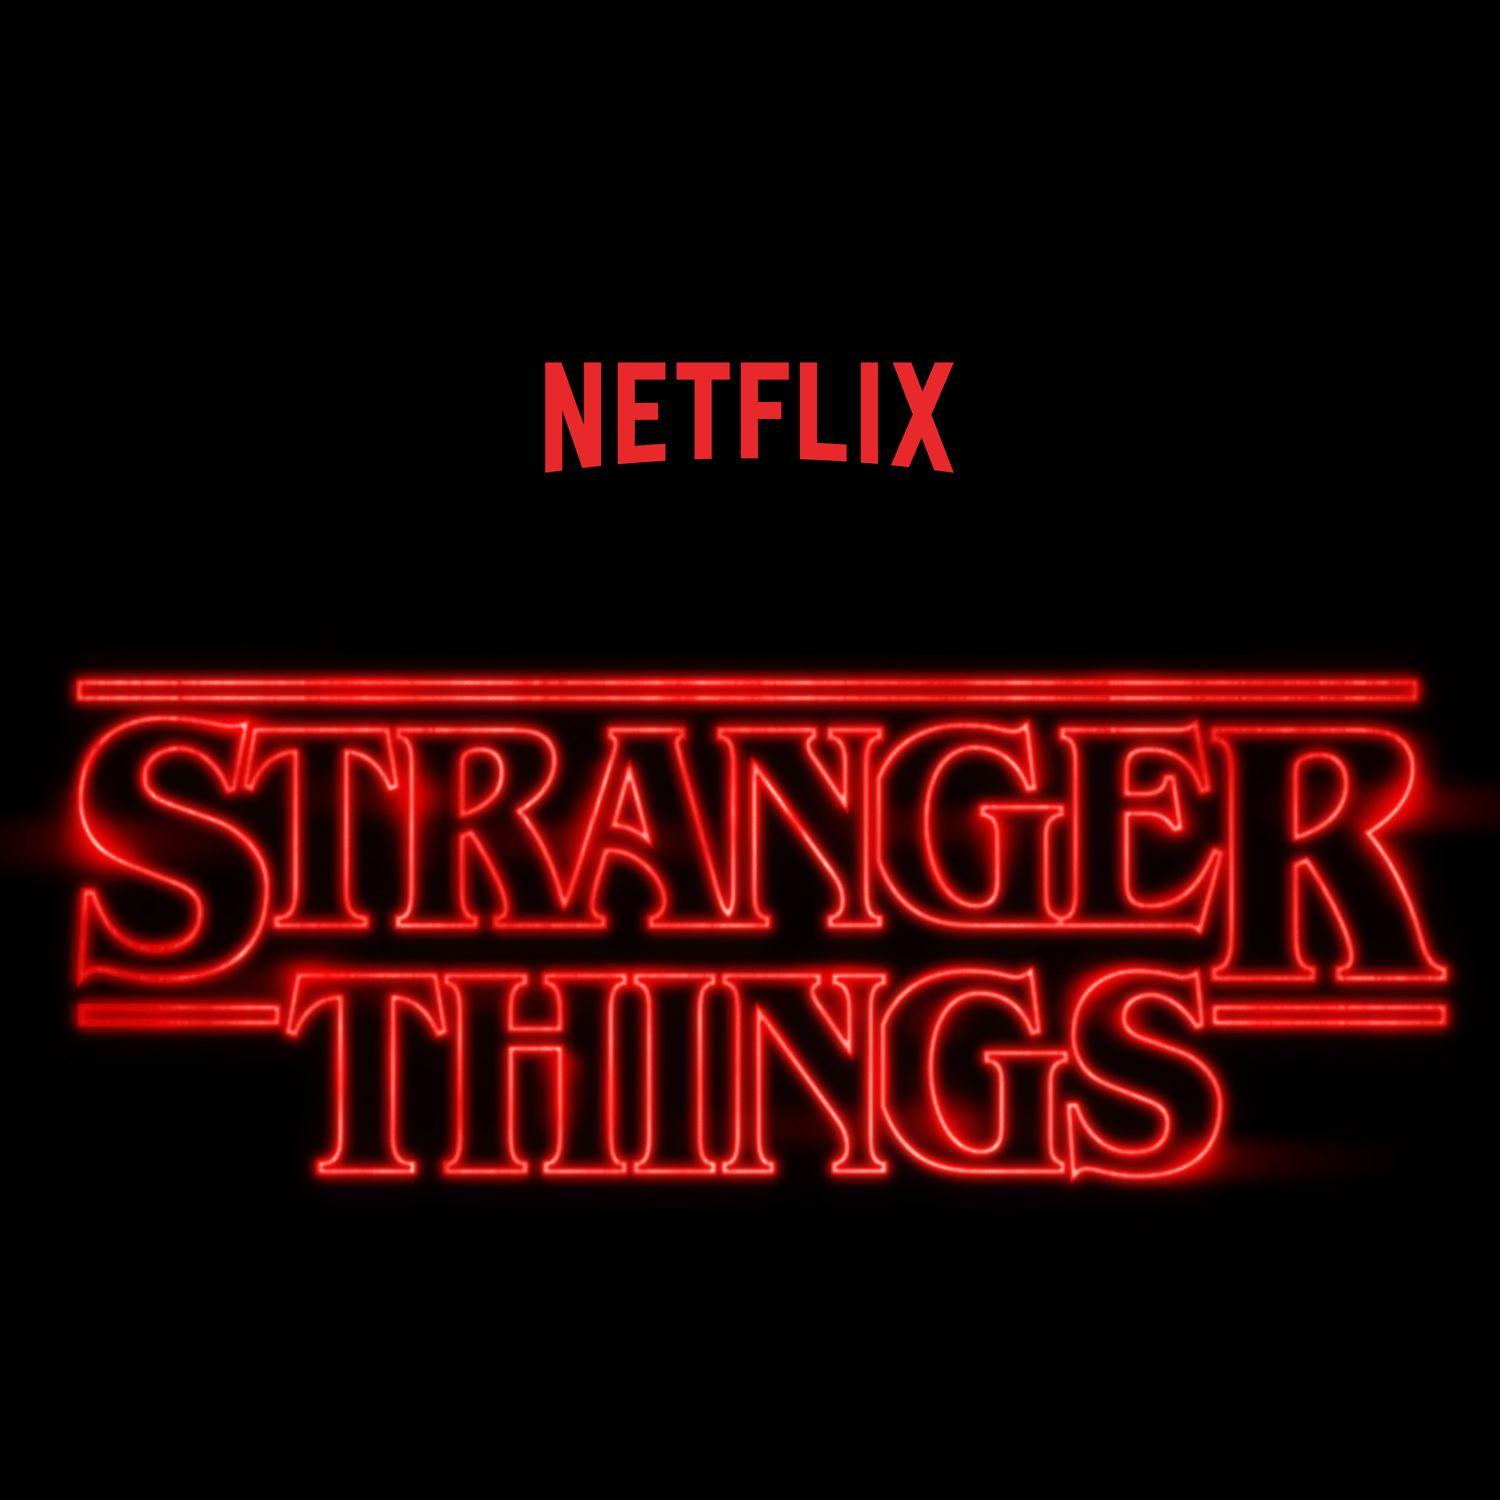 Netflix Official Logo - PodcastOne: Stranger Things S:1. The Upside Down E:8. Official